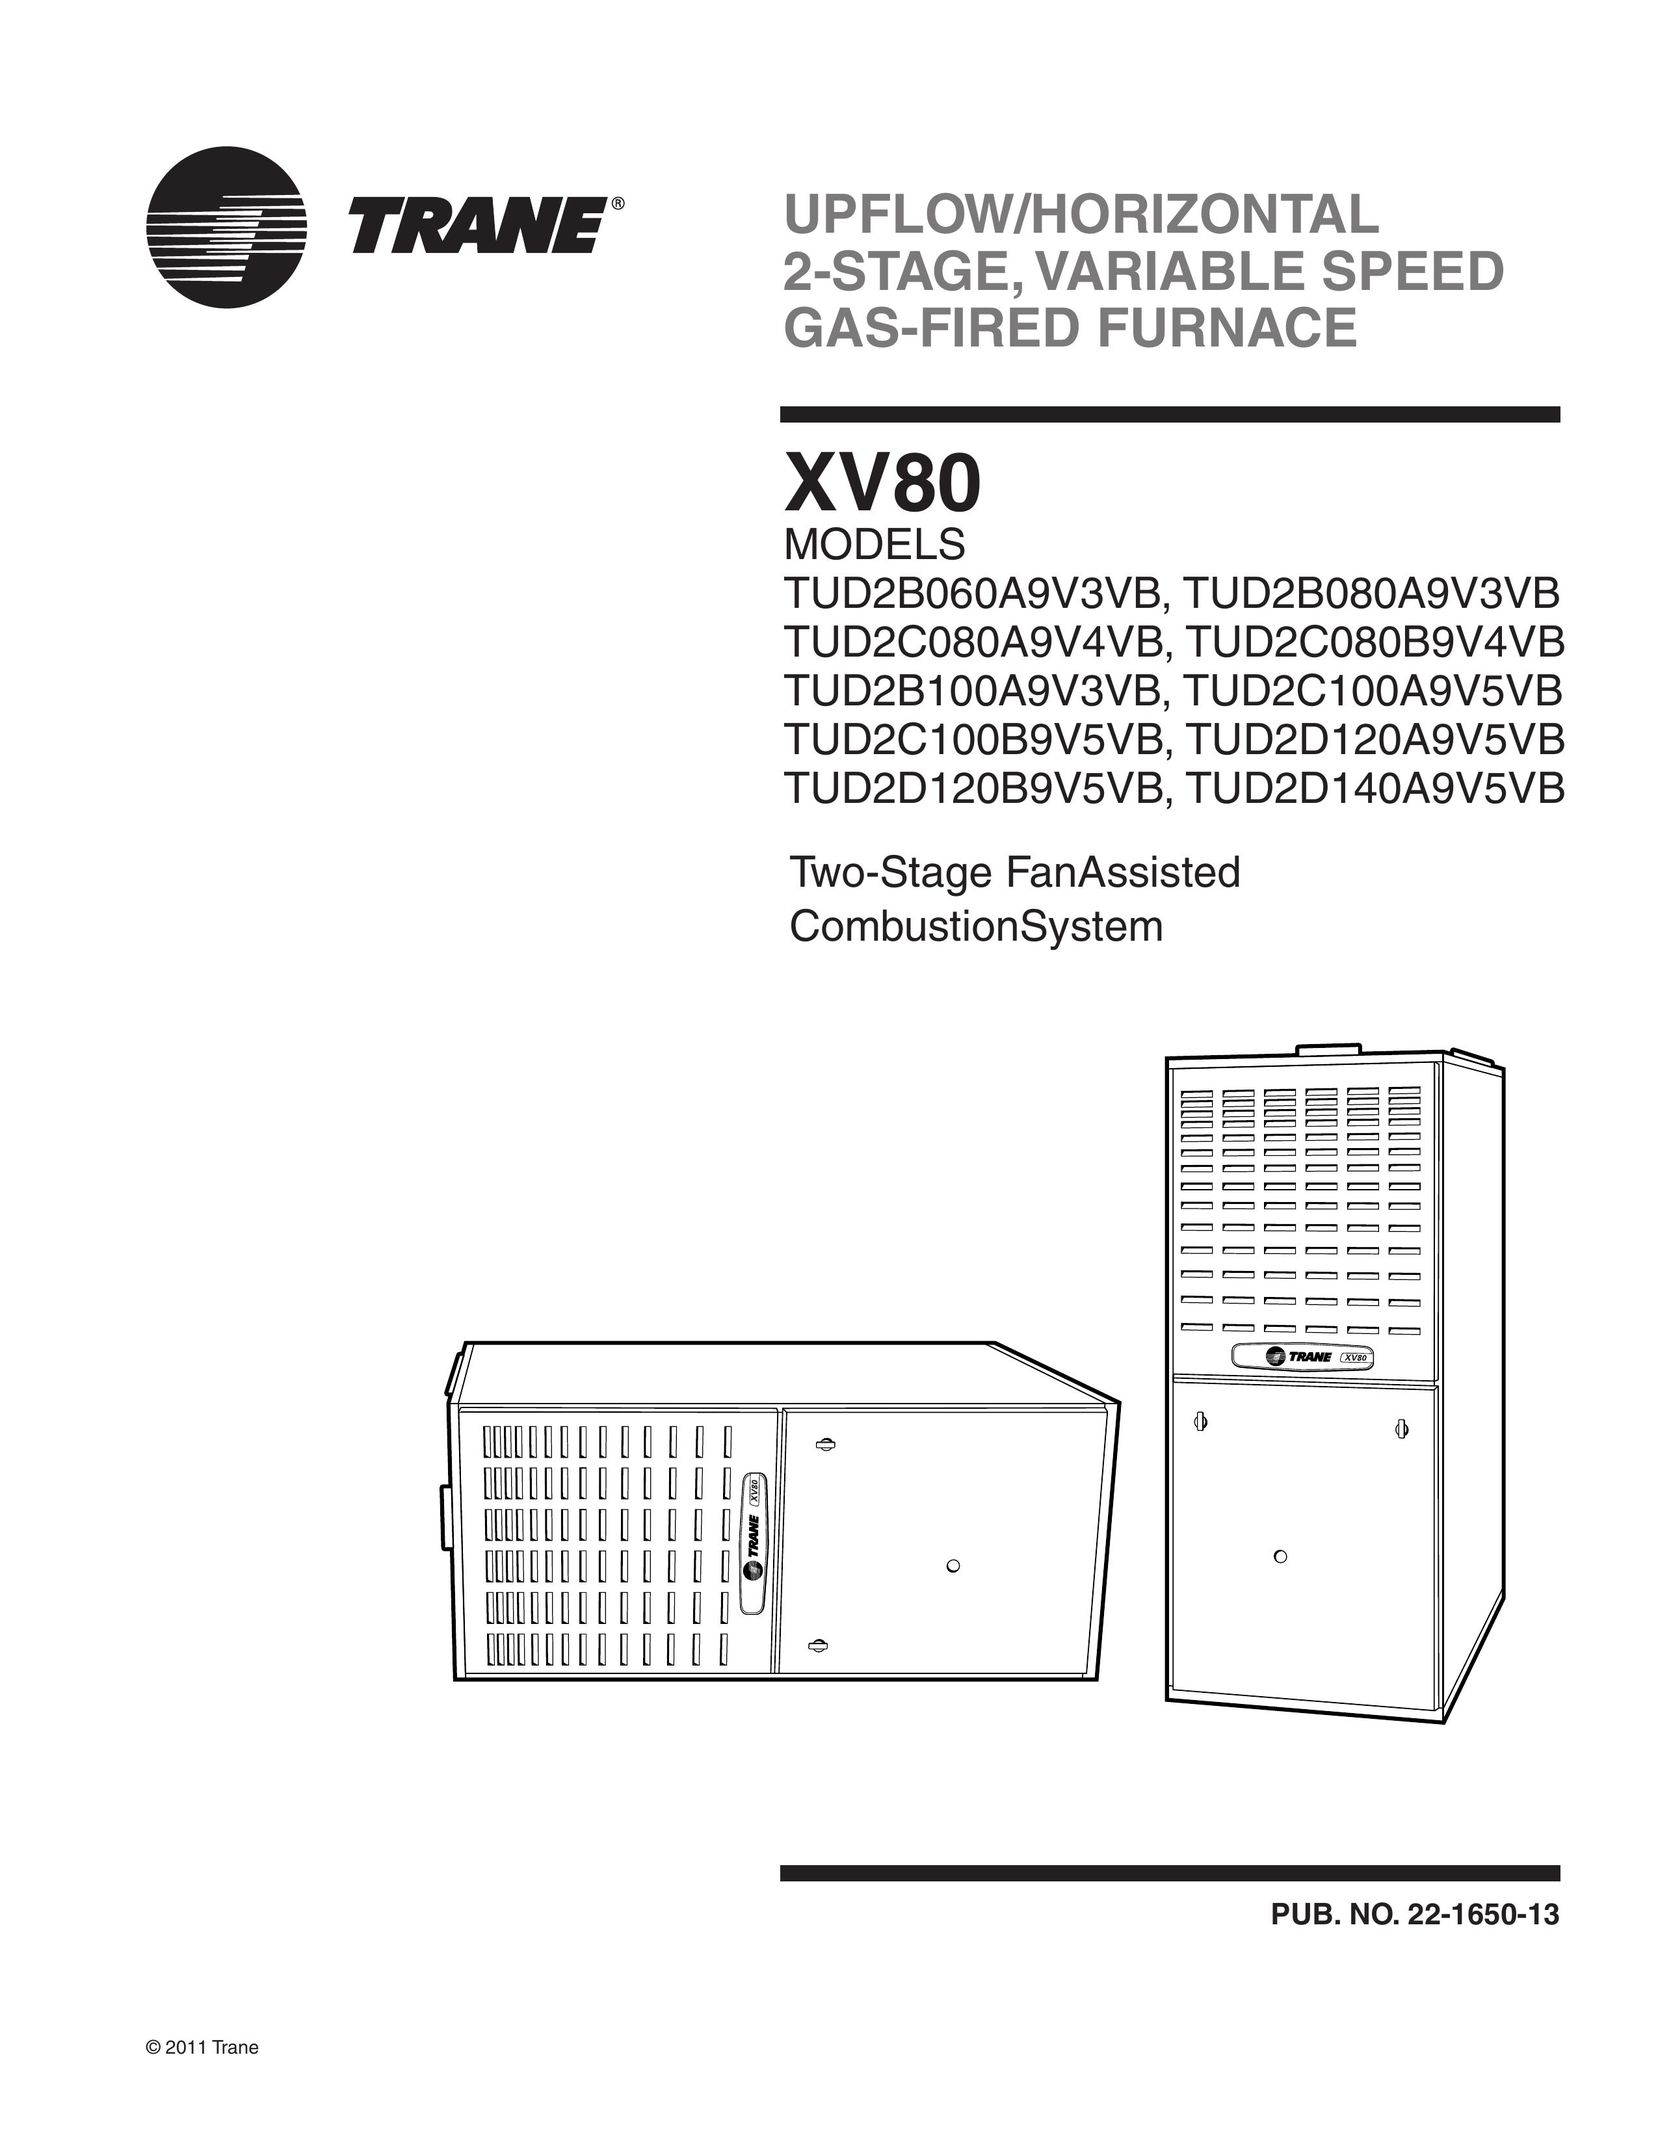 Trane TUD2D140A9V5VB Furnace User Manual